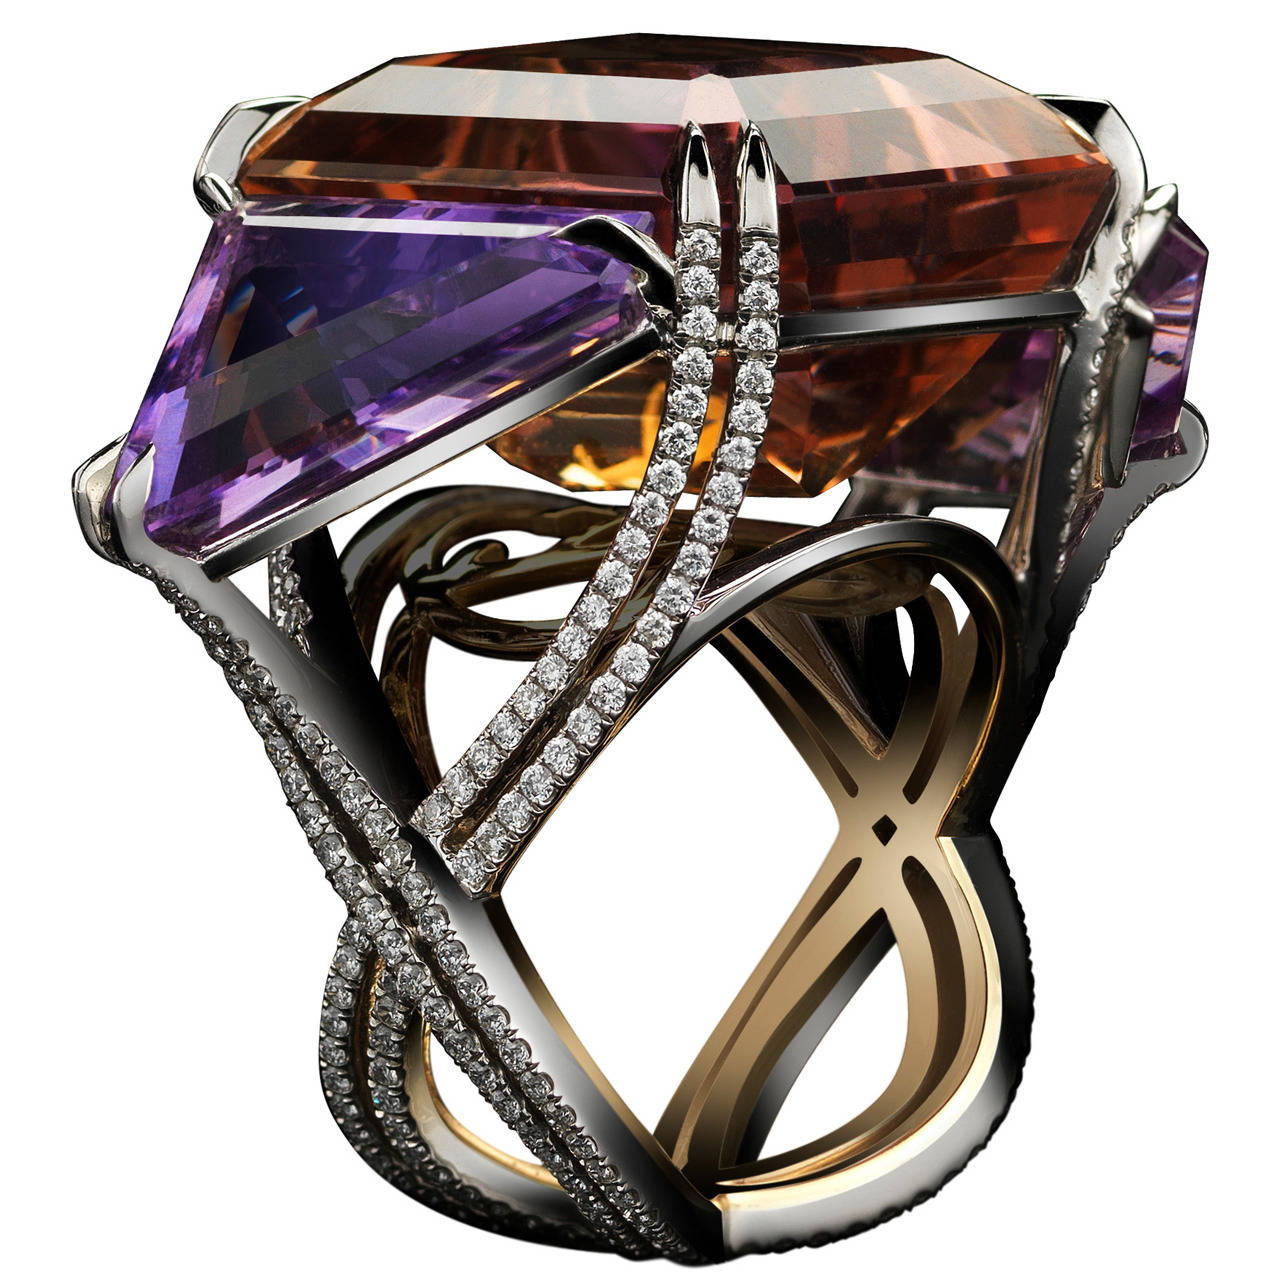 A One-of-A-Kind Alexandra Mor Asymmetrical Bi-Color Ametrine & Diamond Ring